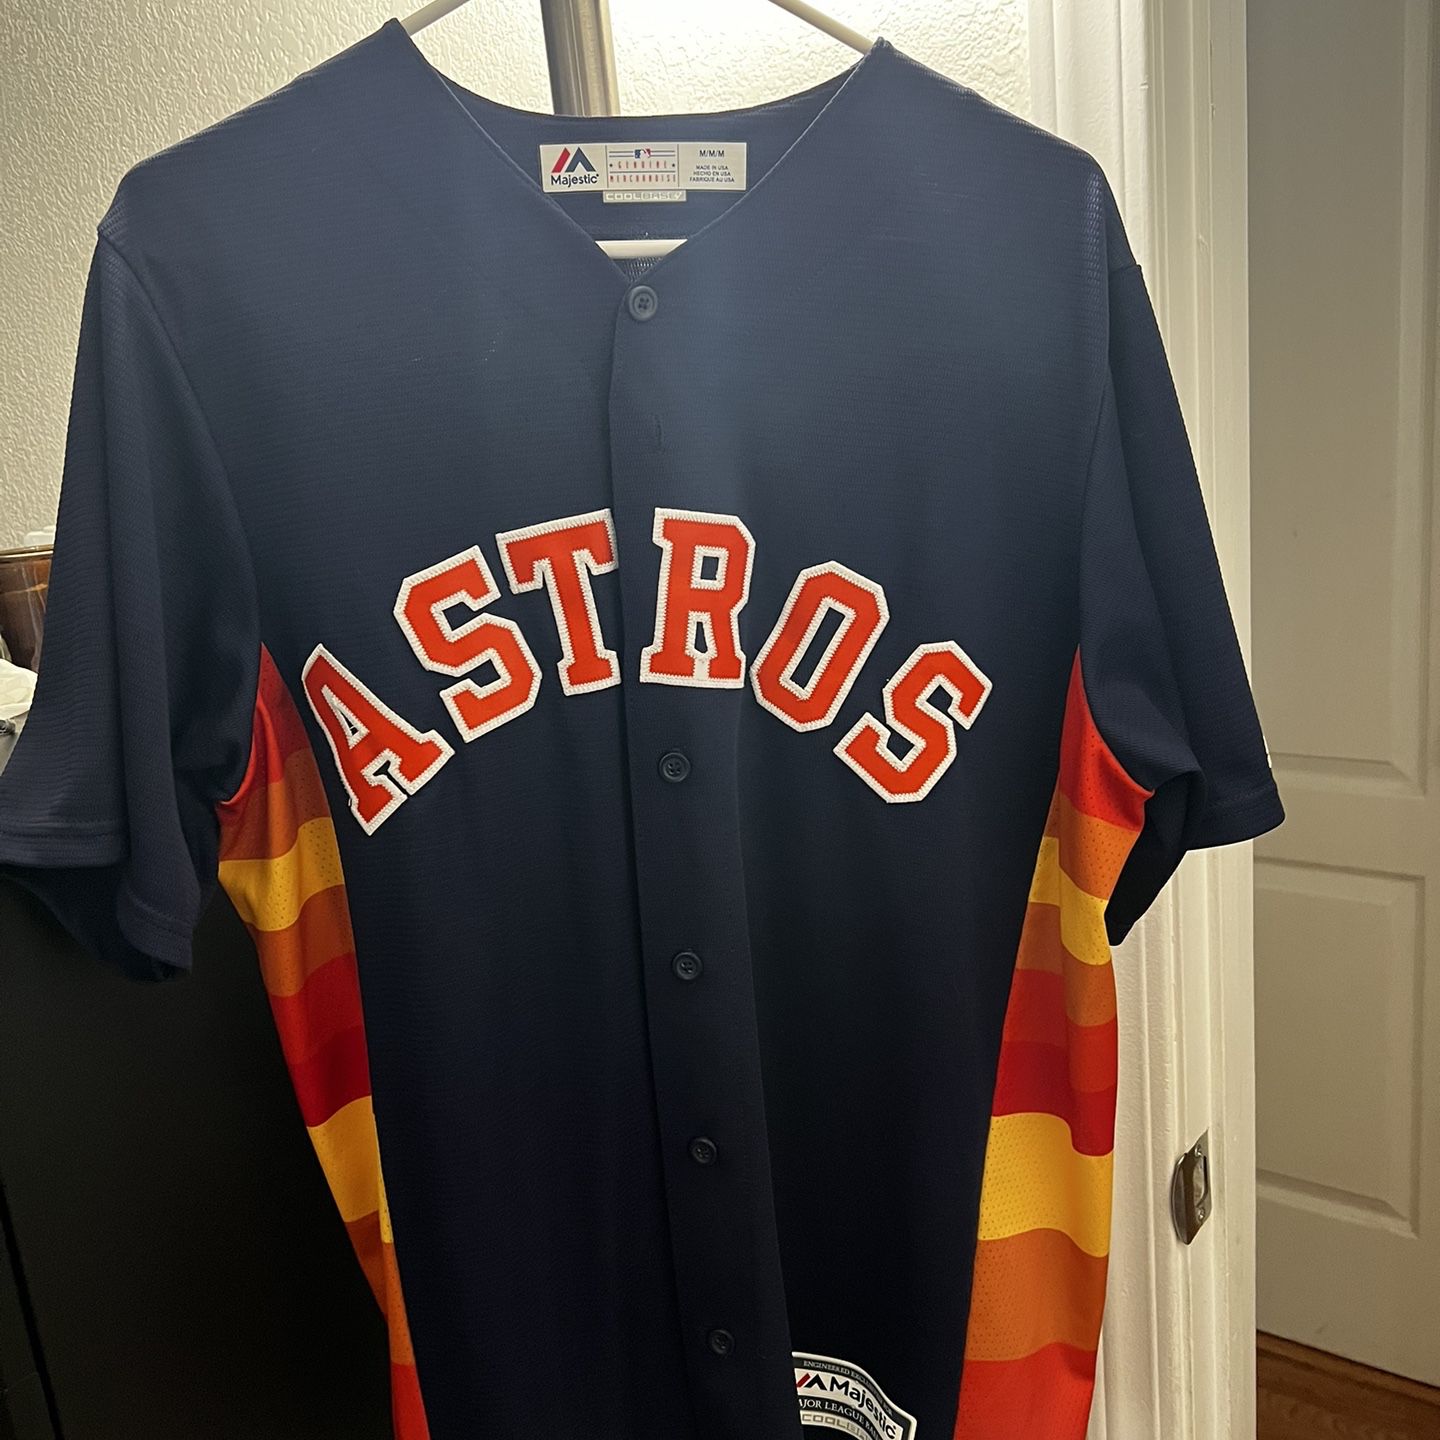 Astros Jose Altuve Jersey for Sale in Fremont, CA - OfferUp